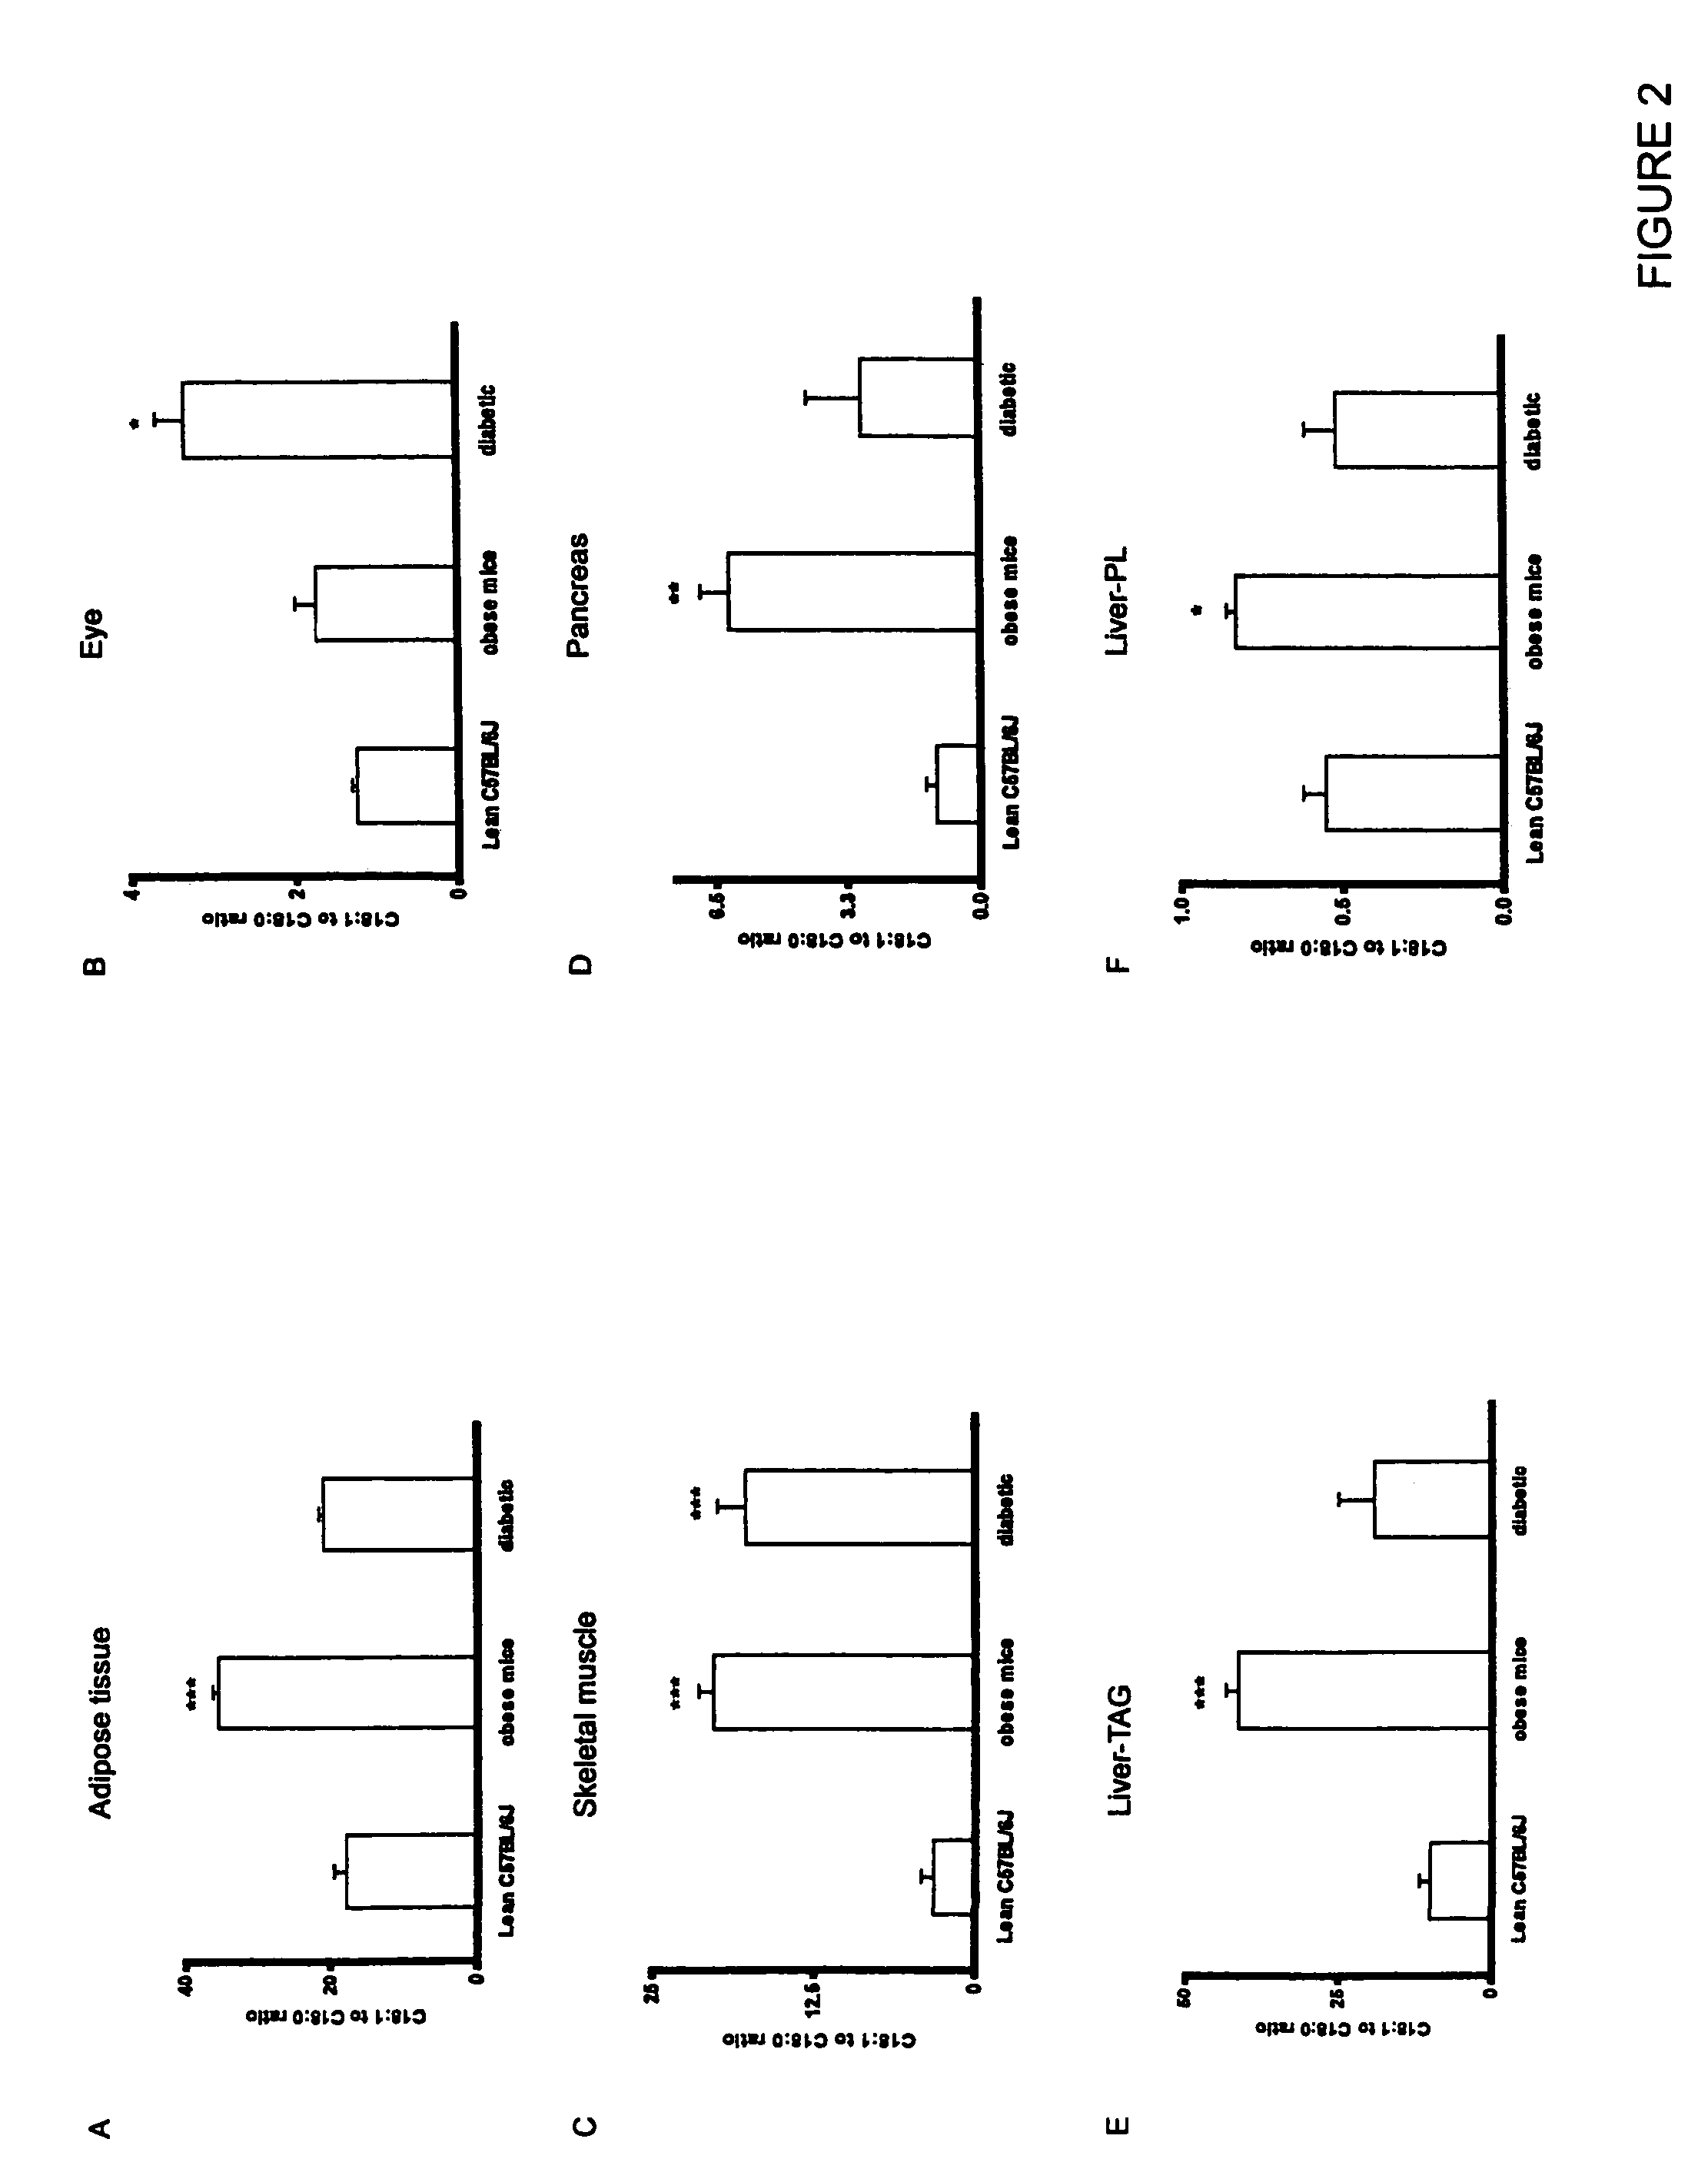 Anti-diabetic extract isolated from <i>Rauvolfia vomitoria </i>and <i>Citrus aurantium</i>, and method of using same